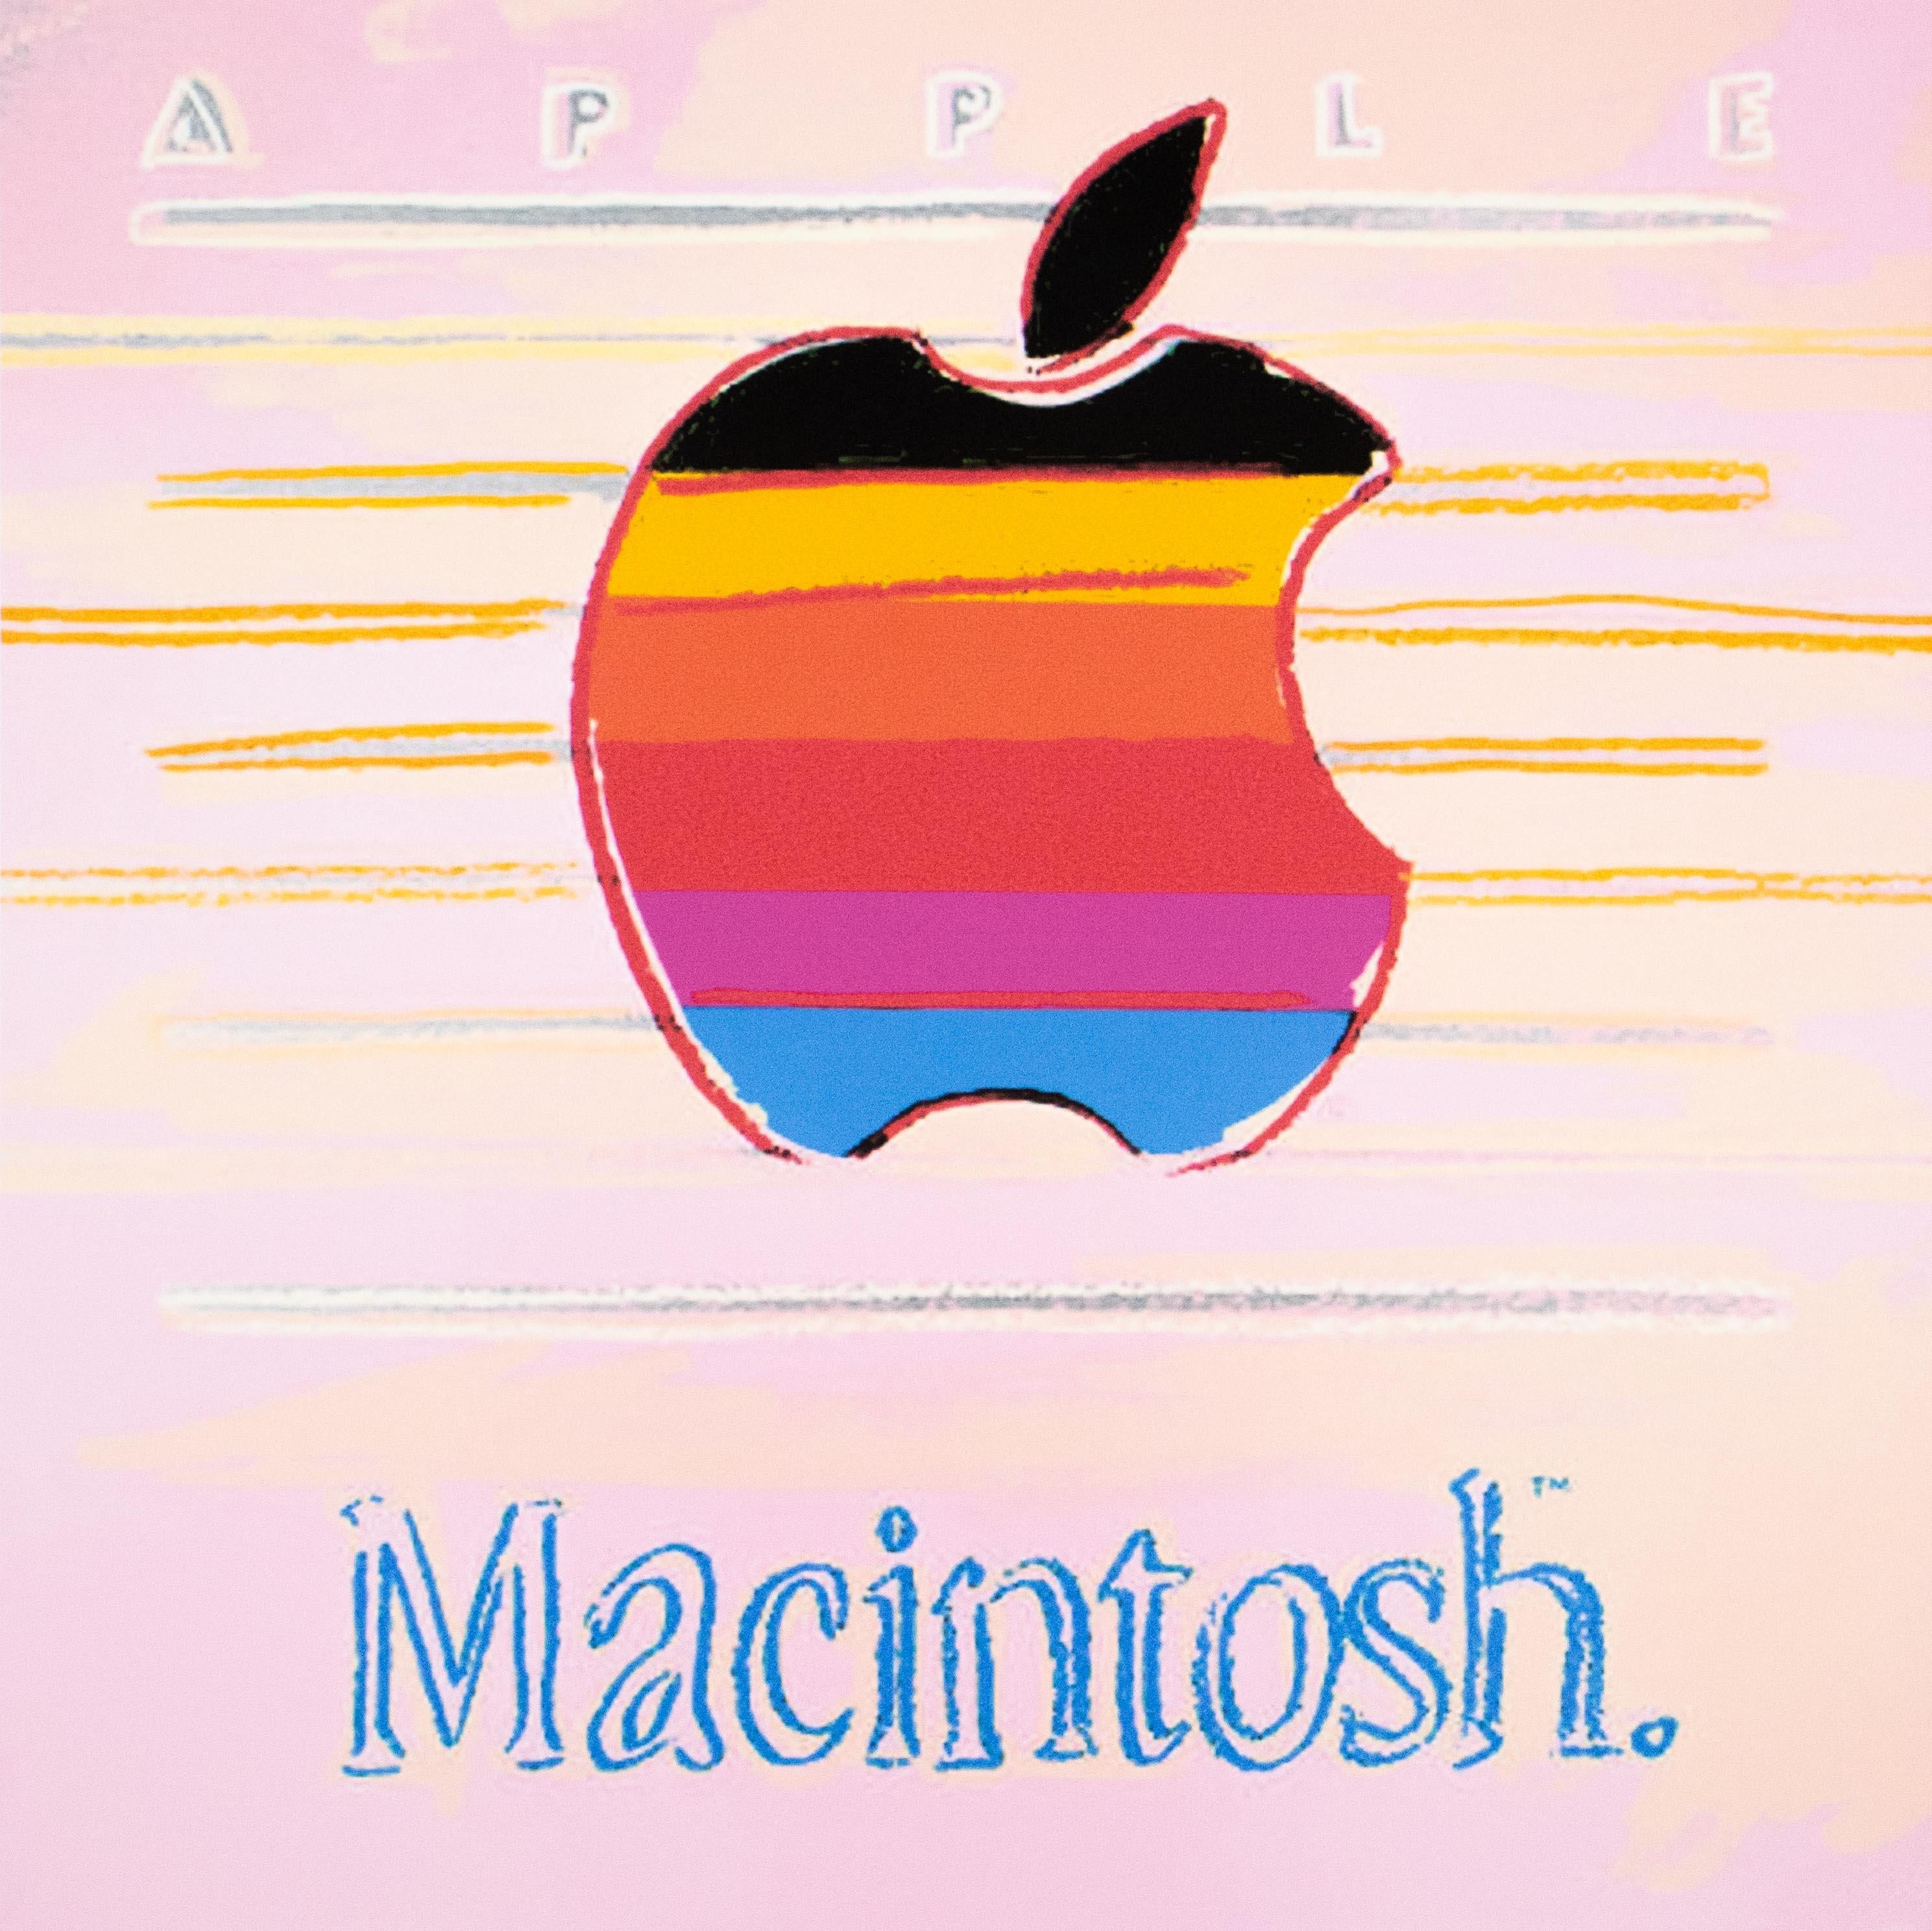 Andy Warhol Figurative Print - Apple Macintosh - 1983 - Original Lithograph - Limited Edition Print - 15/100